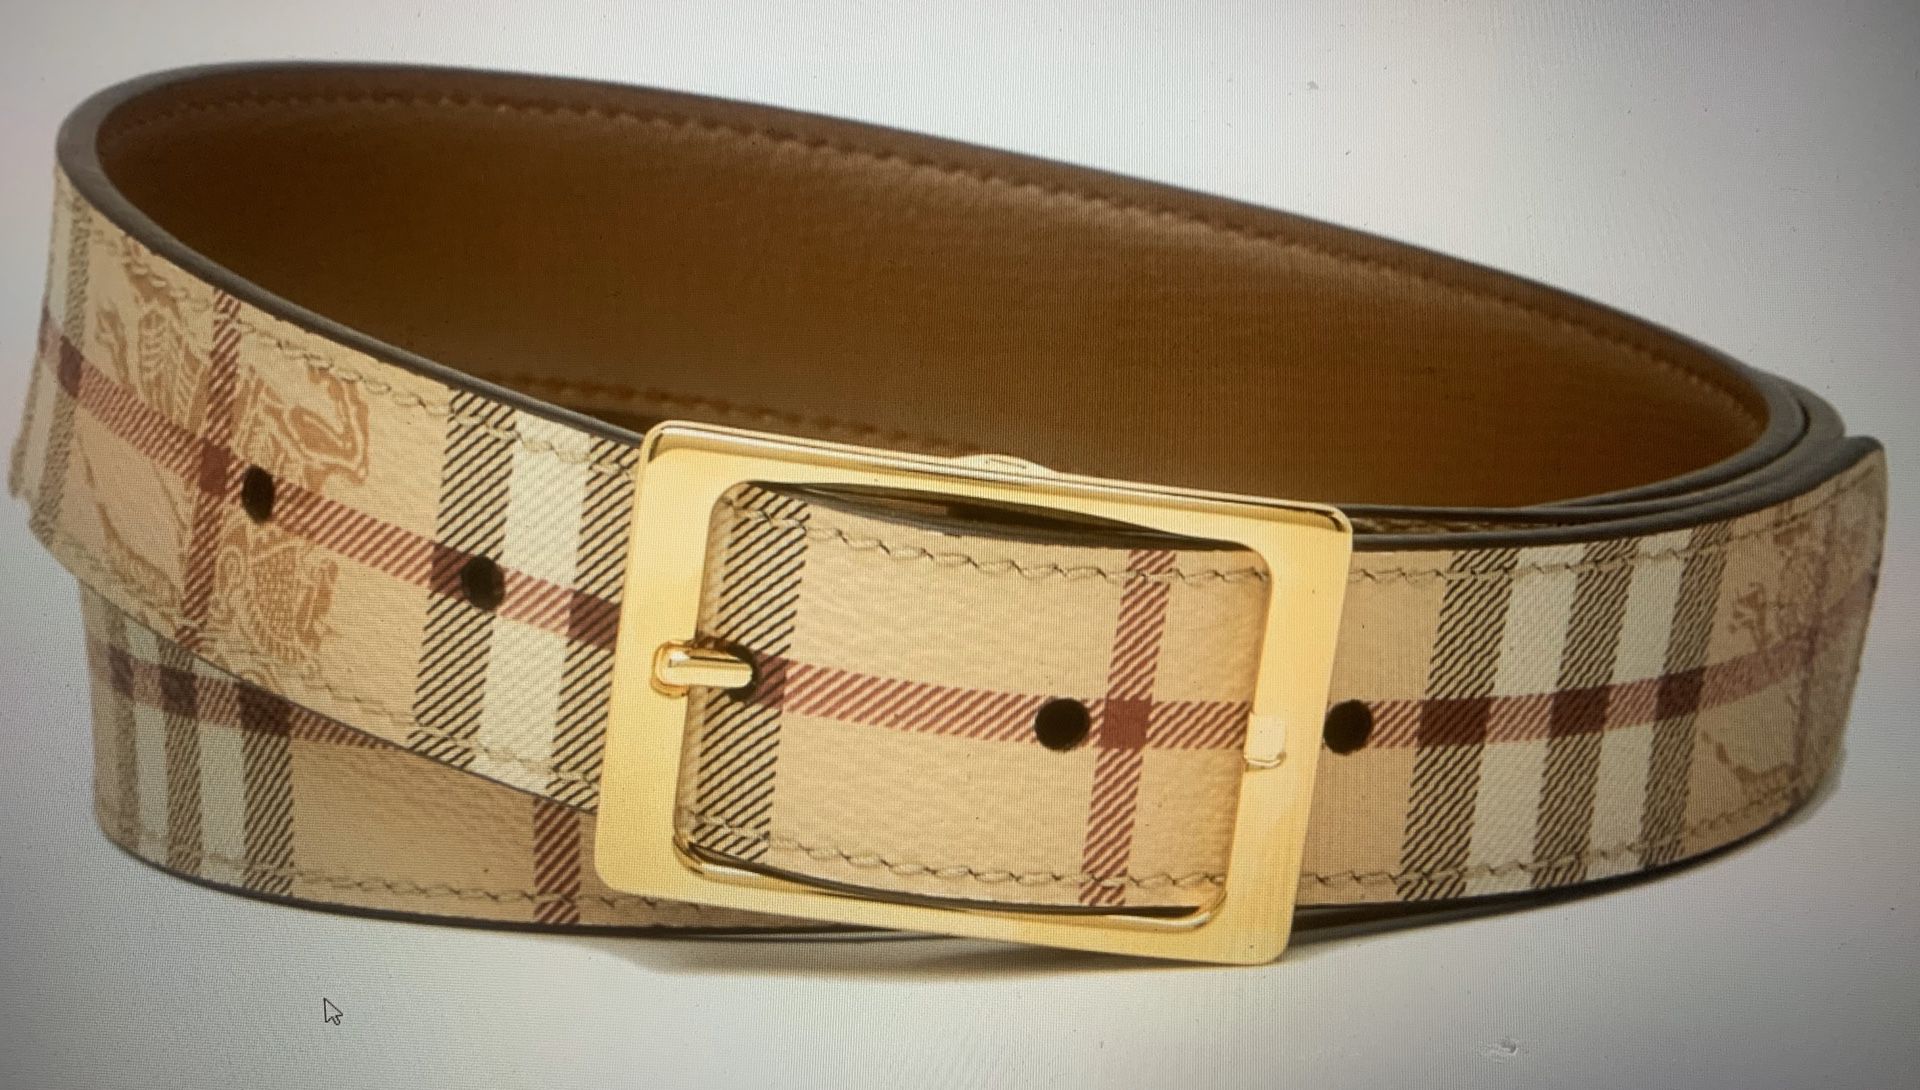 Brand new Burberry Plaid Leather Belt size 95 (36-38)